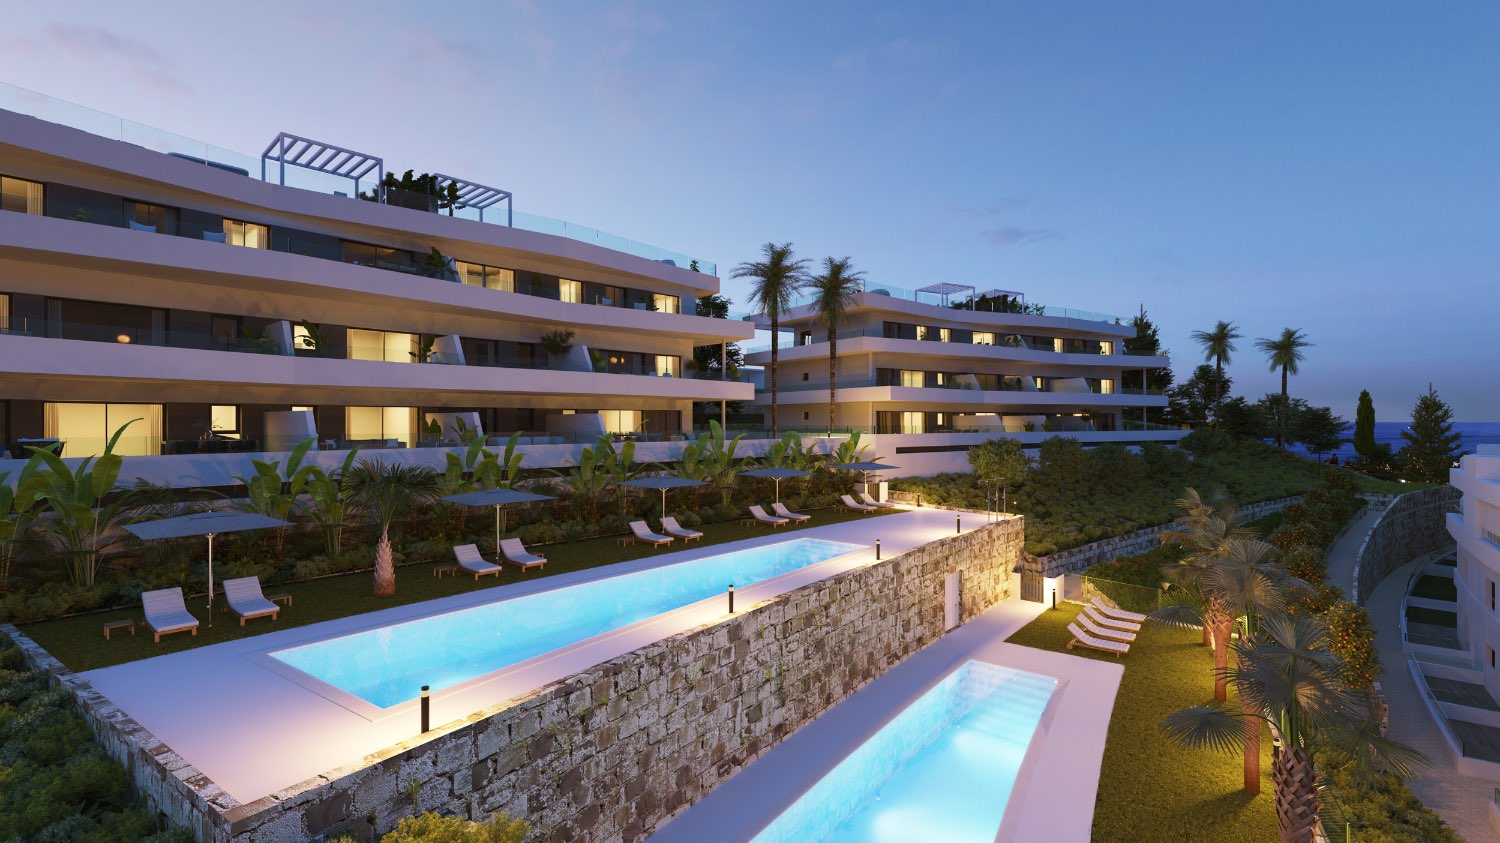 Luxury ground floor apartment in a new development in Estepona - Costa del Sol